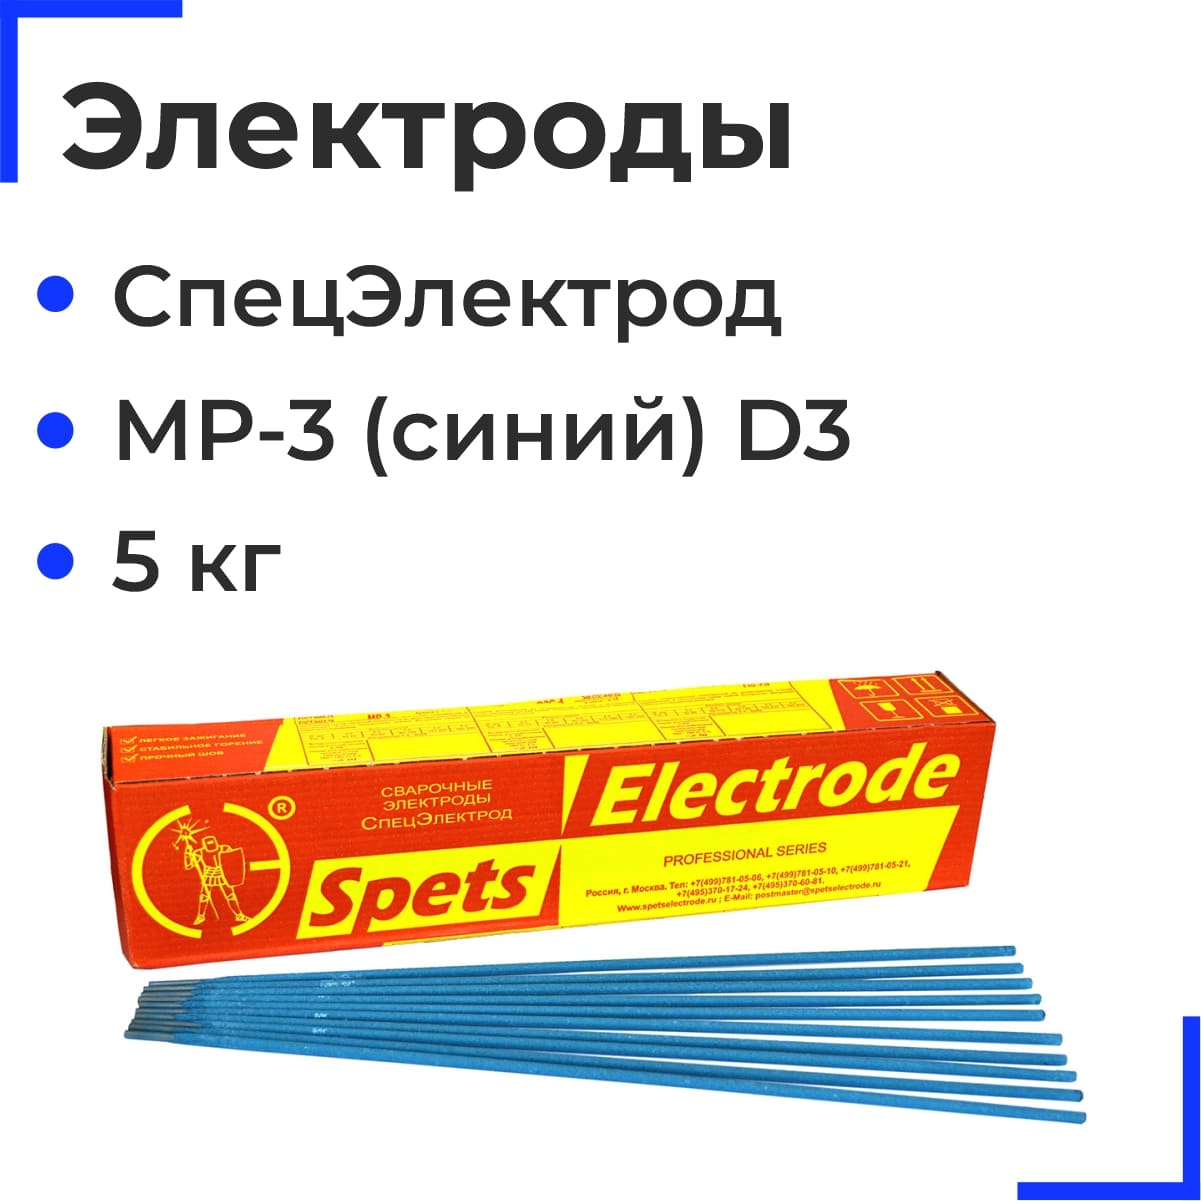 МР-3 (синий) D3 Электроды СпецЭлектрод (5кг)